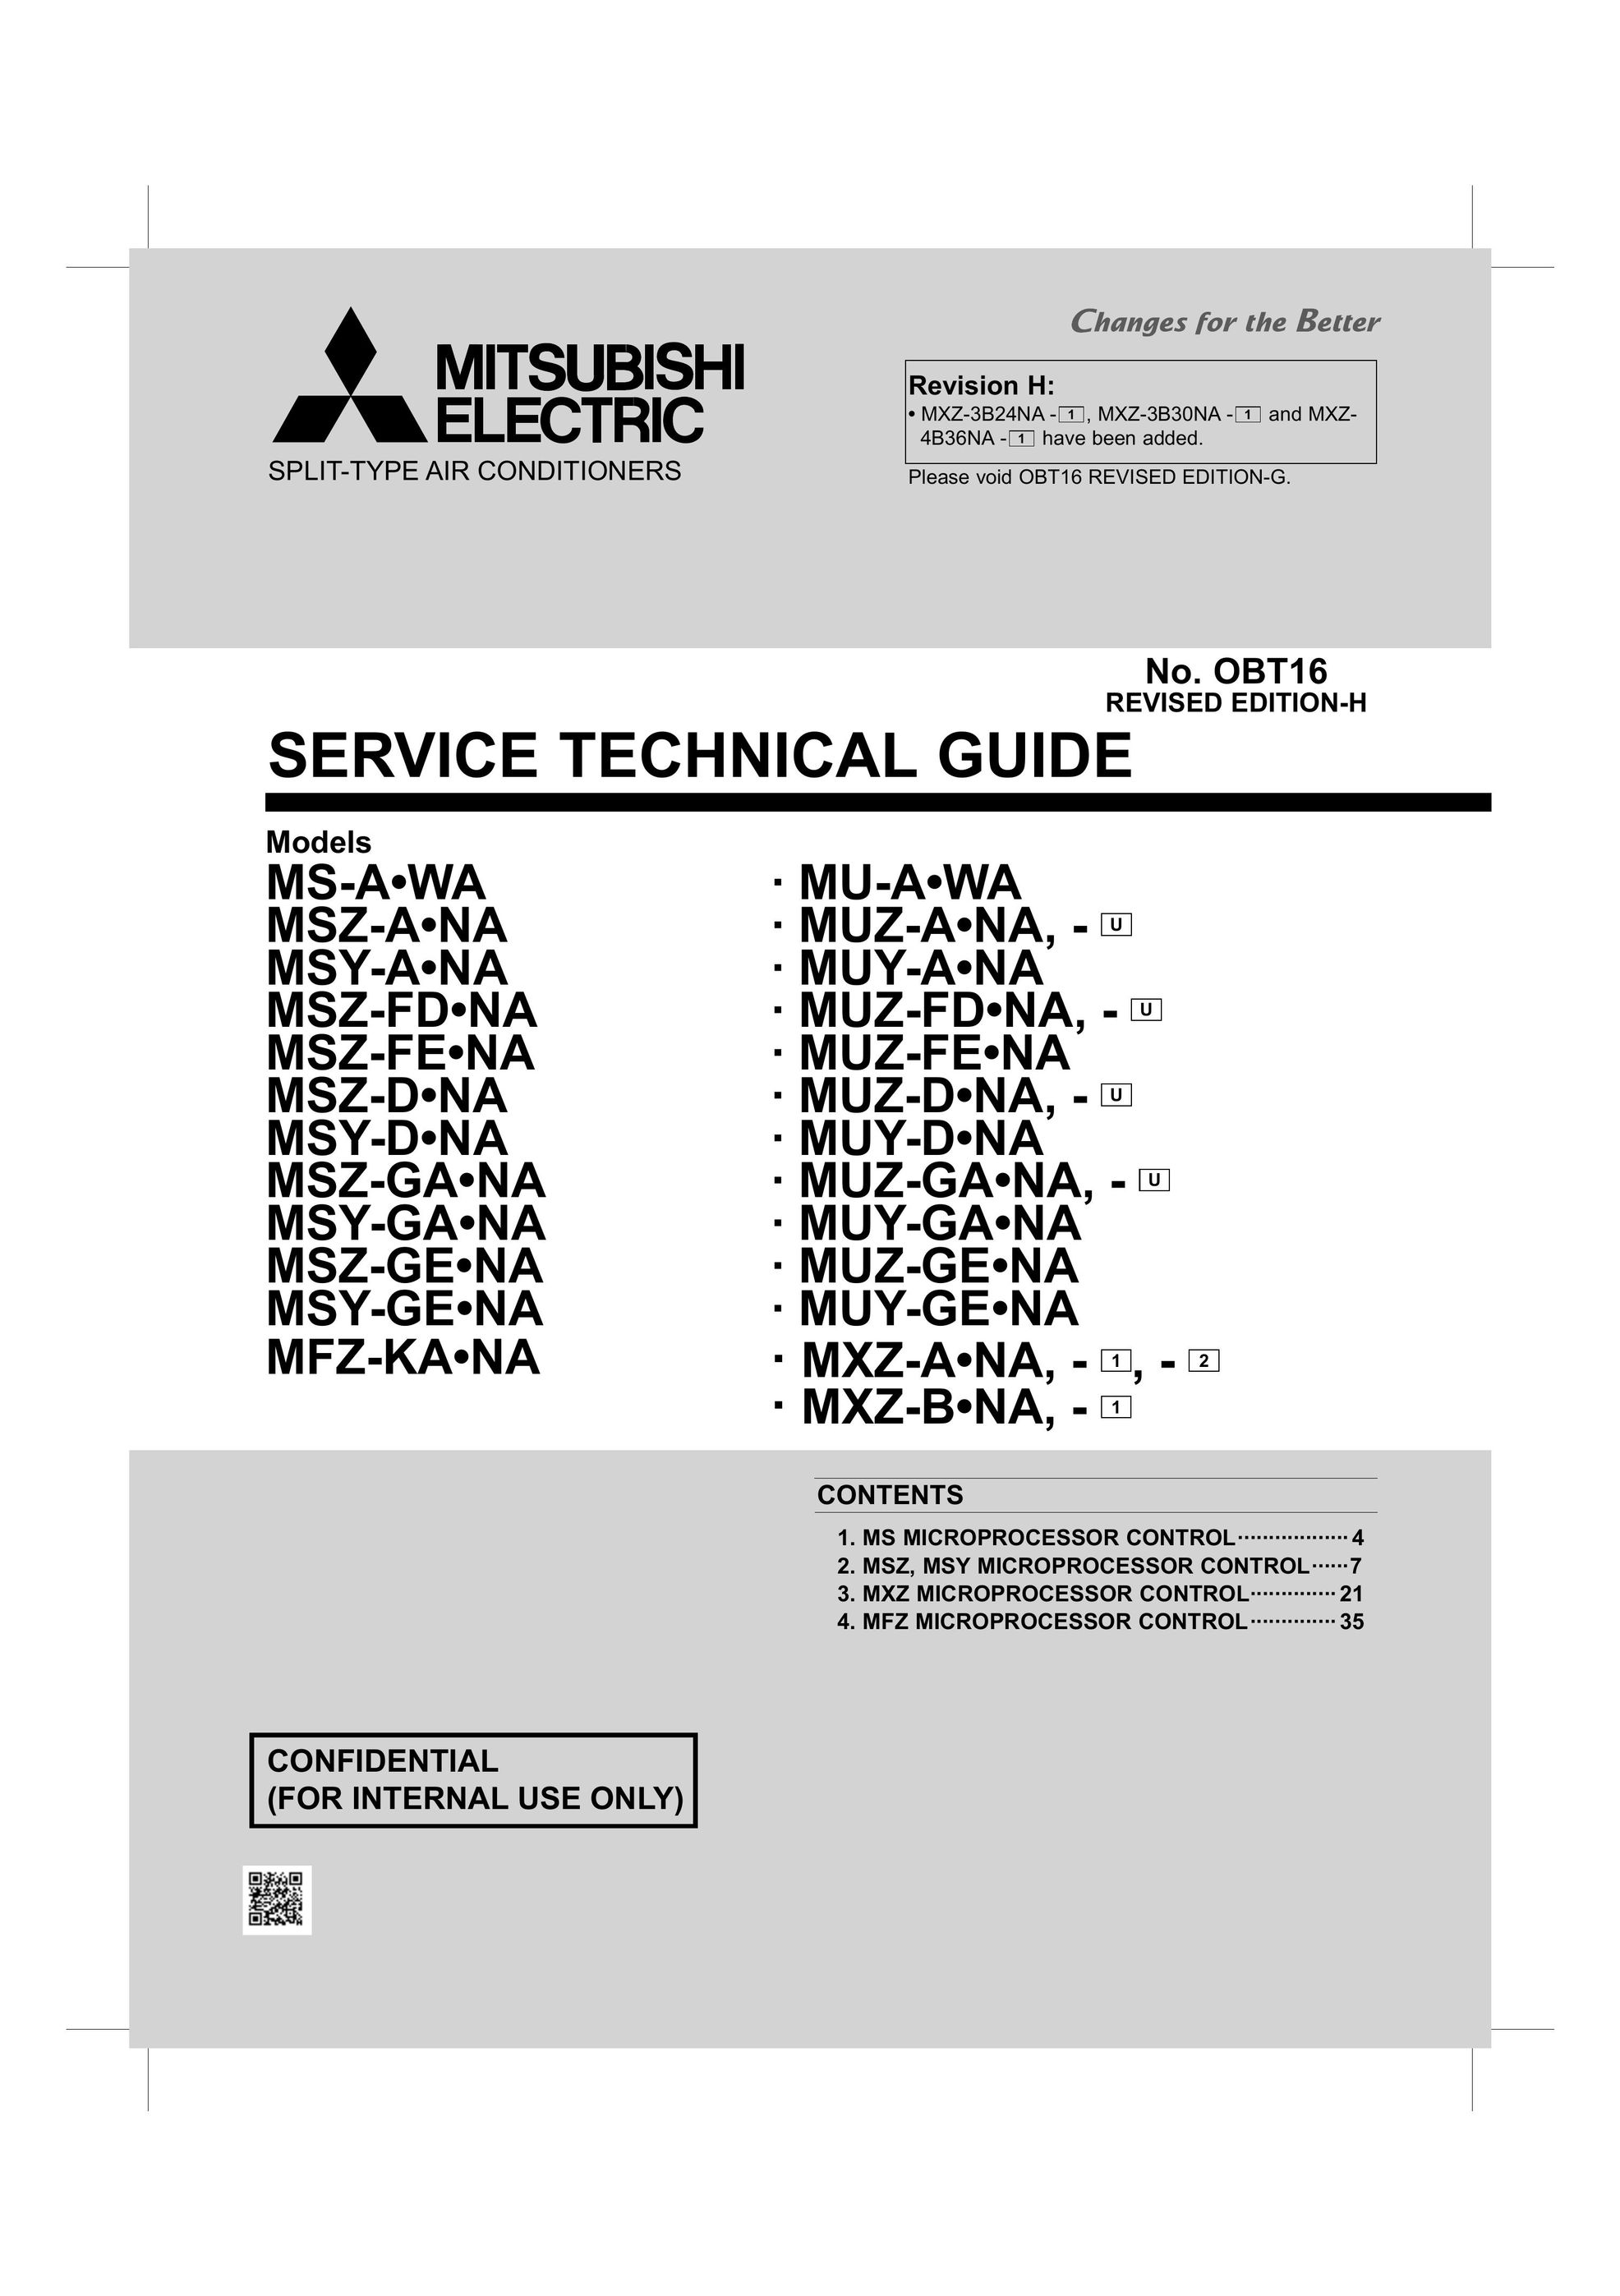 Mitsumi electronic MSY-GANA Air Conditioner User Manual